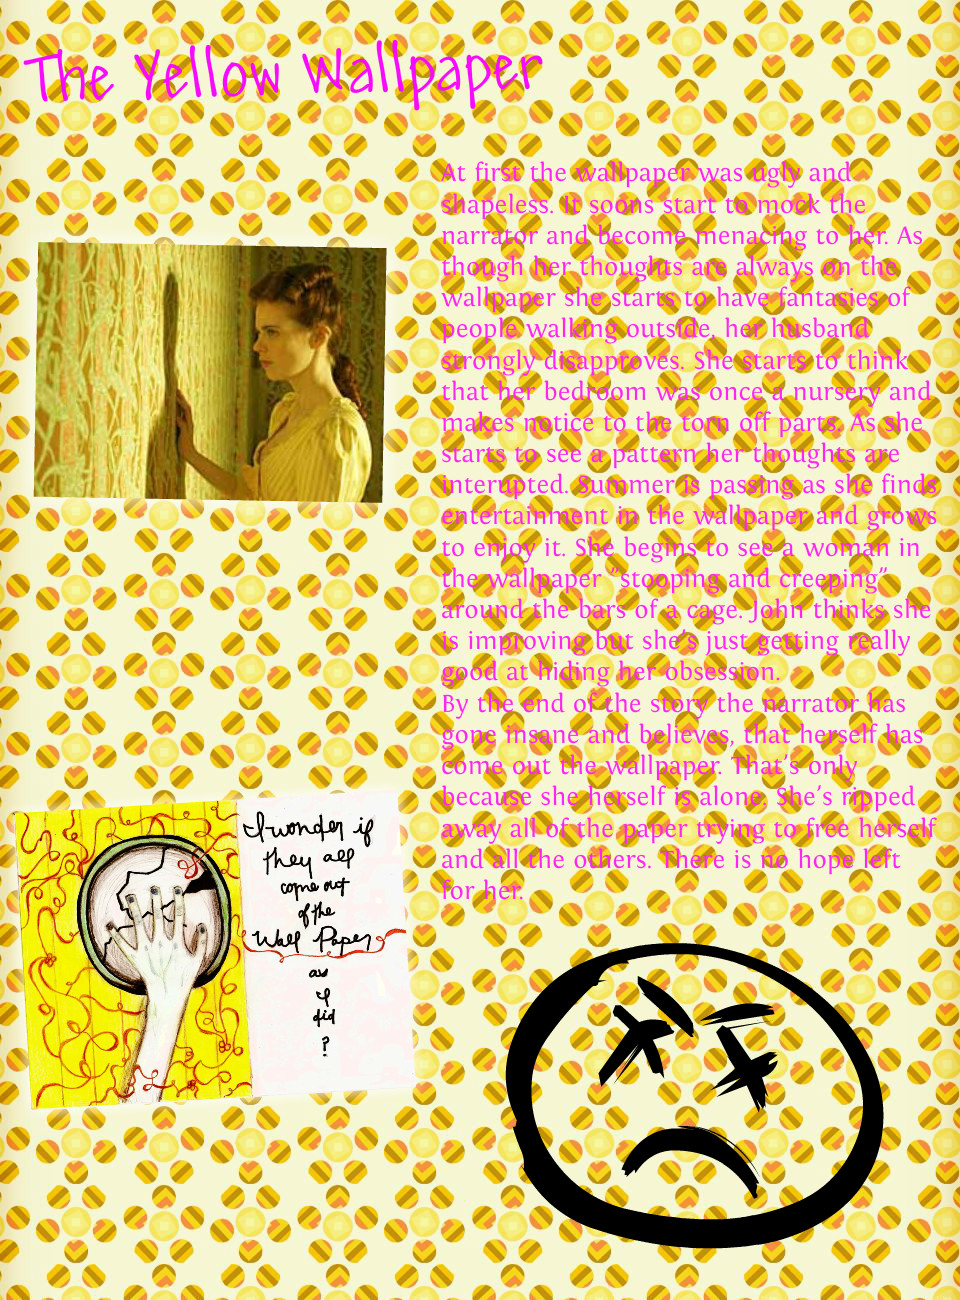 The Yellow Wallpaper Creeping The yellow wallpaper